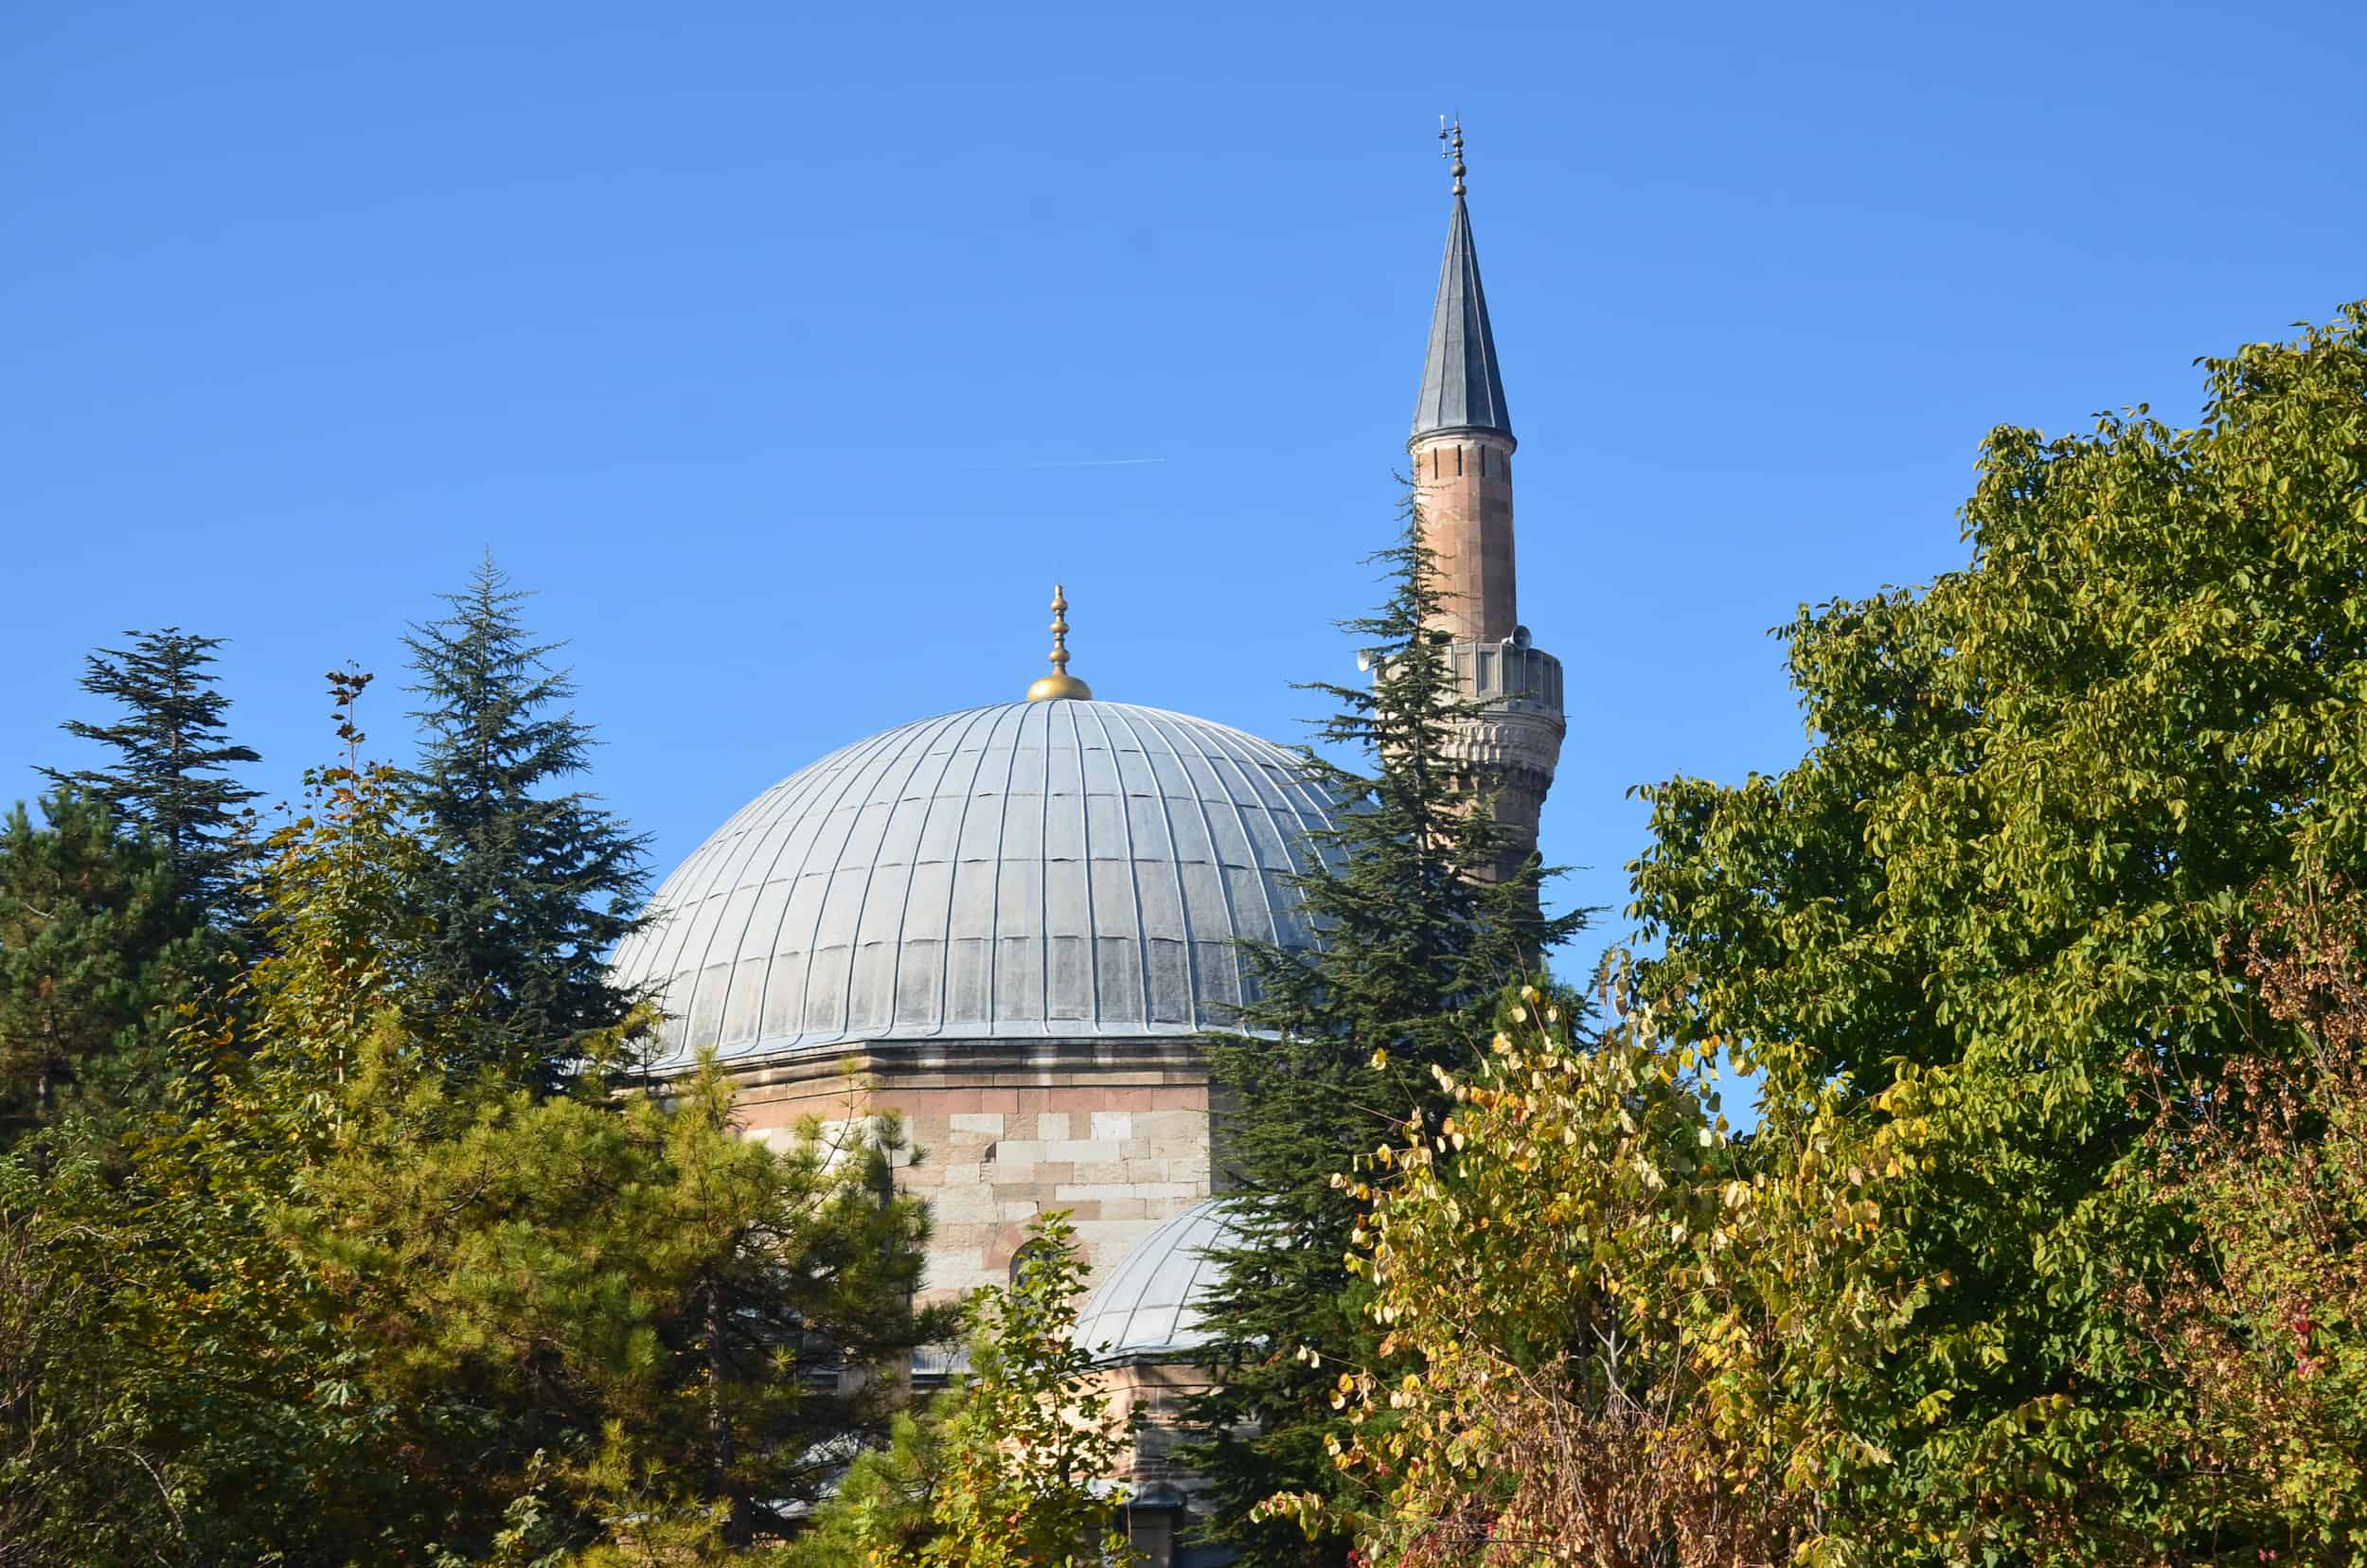 Lead-covered dome of the Kurşunlu Mosque in Odunpazarı, Eskişehir, Turkey